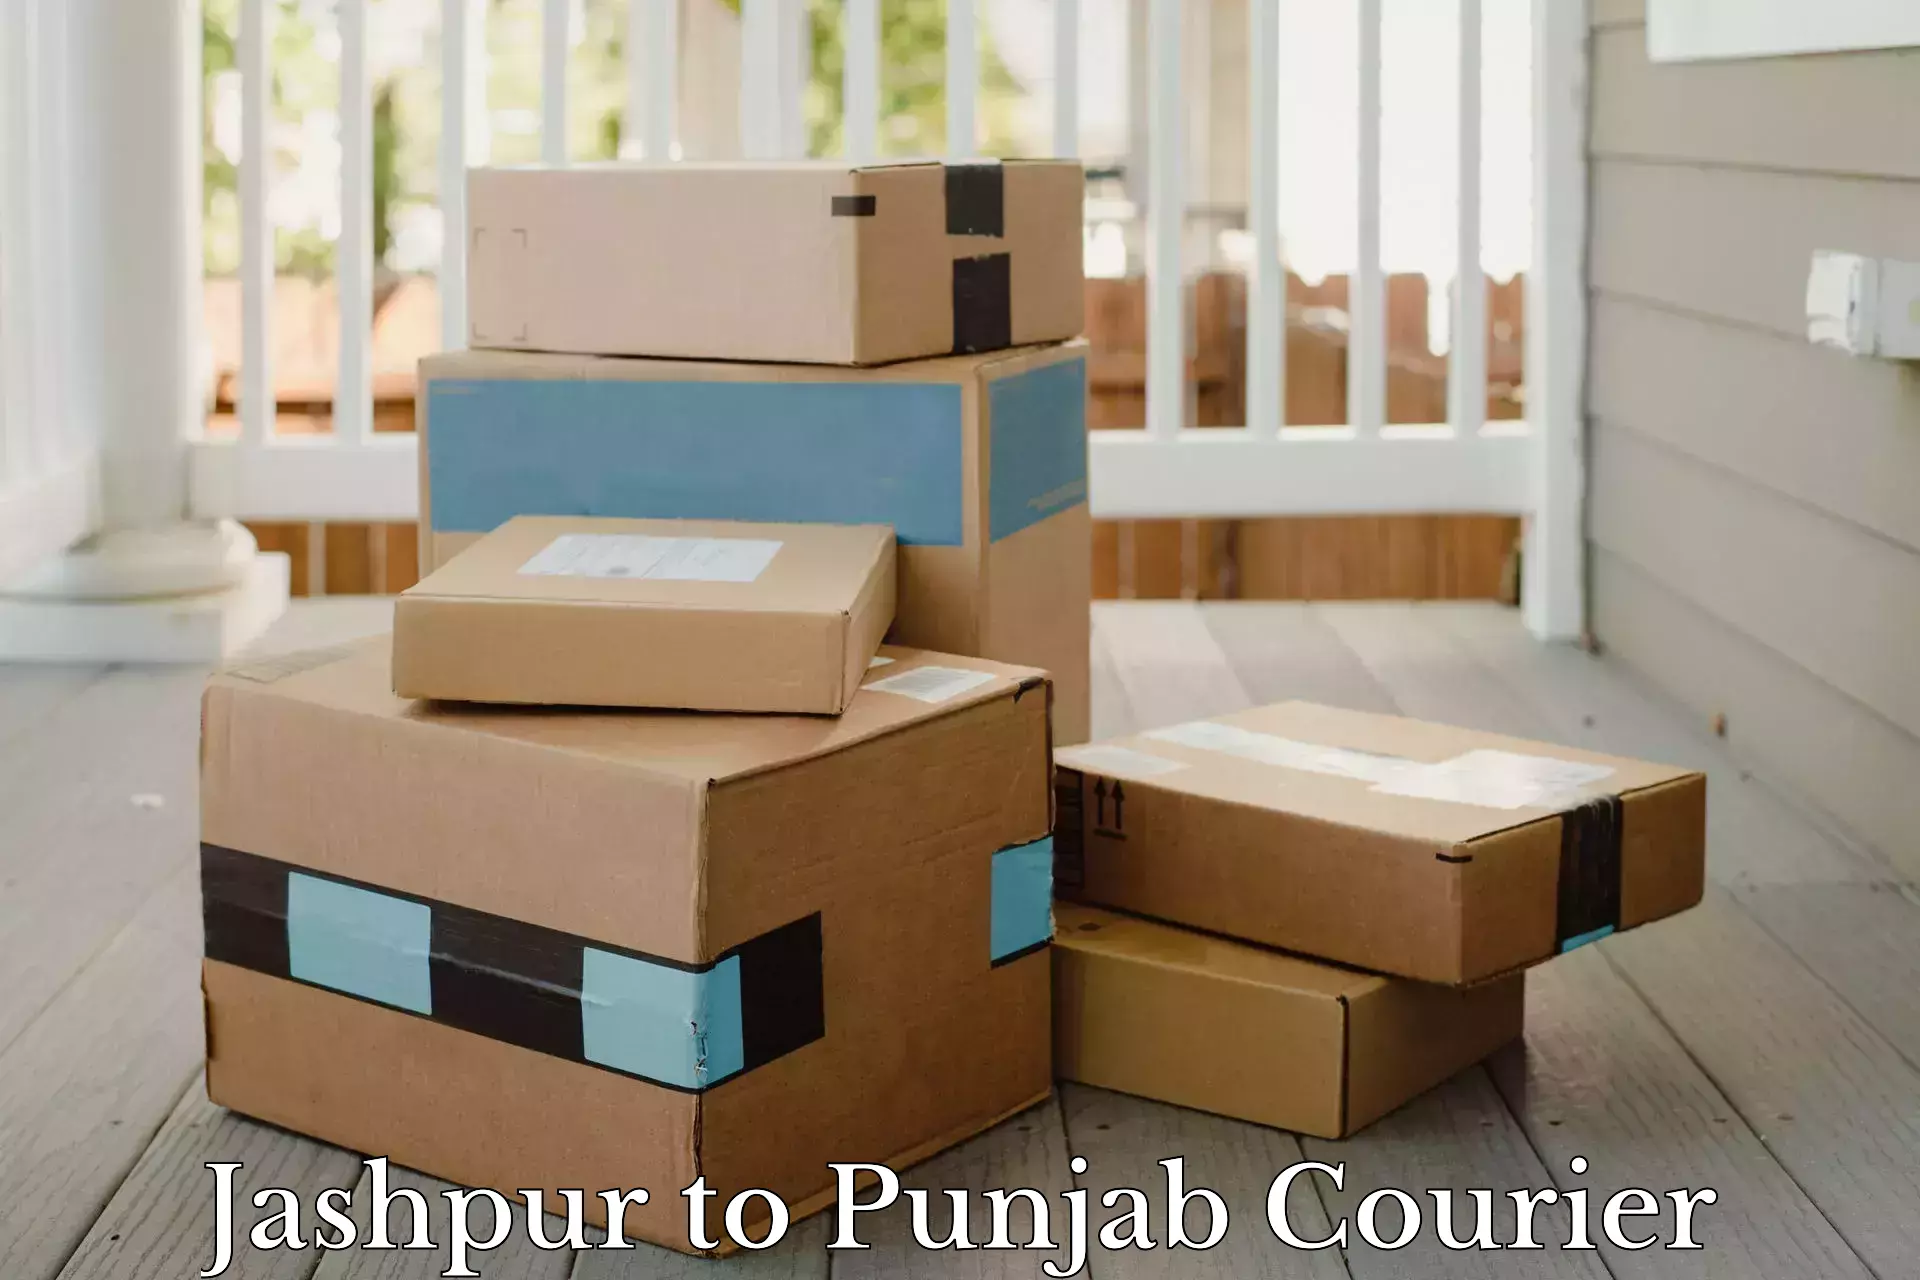 Courier service comparison Jashpur to Mandi Gobindgarh